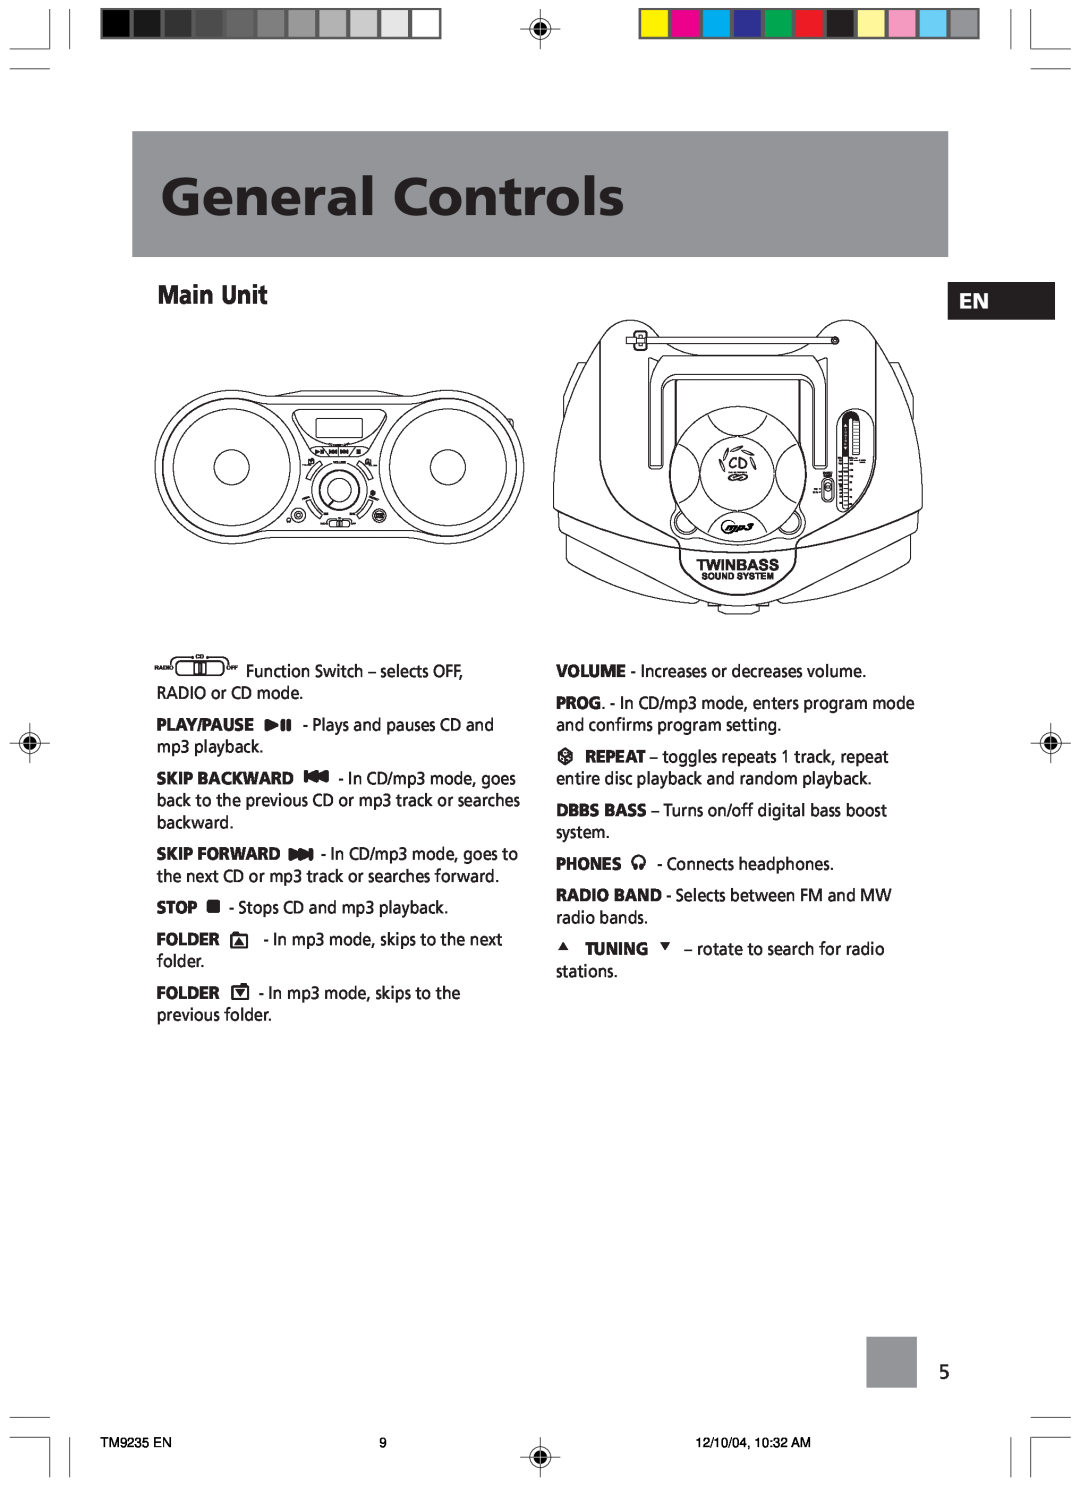 Technicolor - Thomson TM9235 EN manual General Controls, Main Unit 